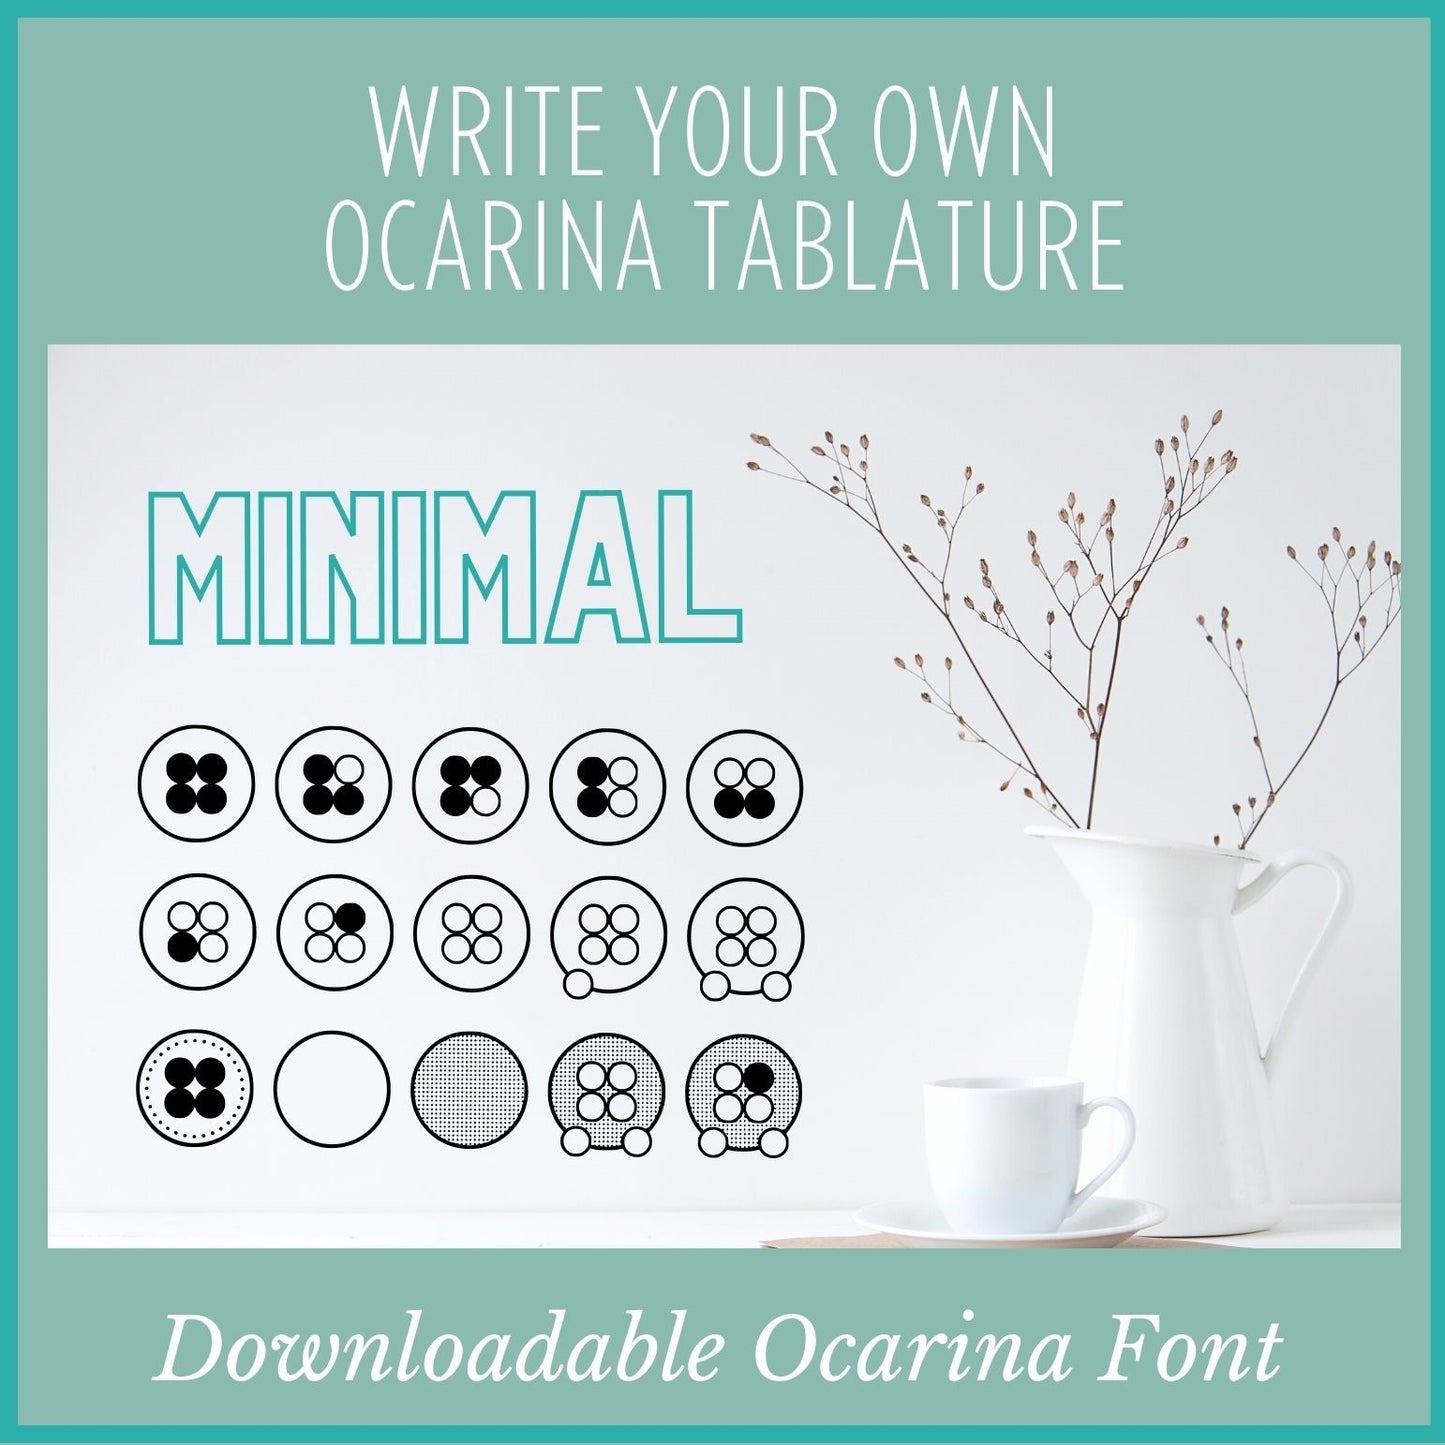 6-Hole Pendant Ocarina Font, "Minimal"